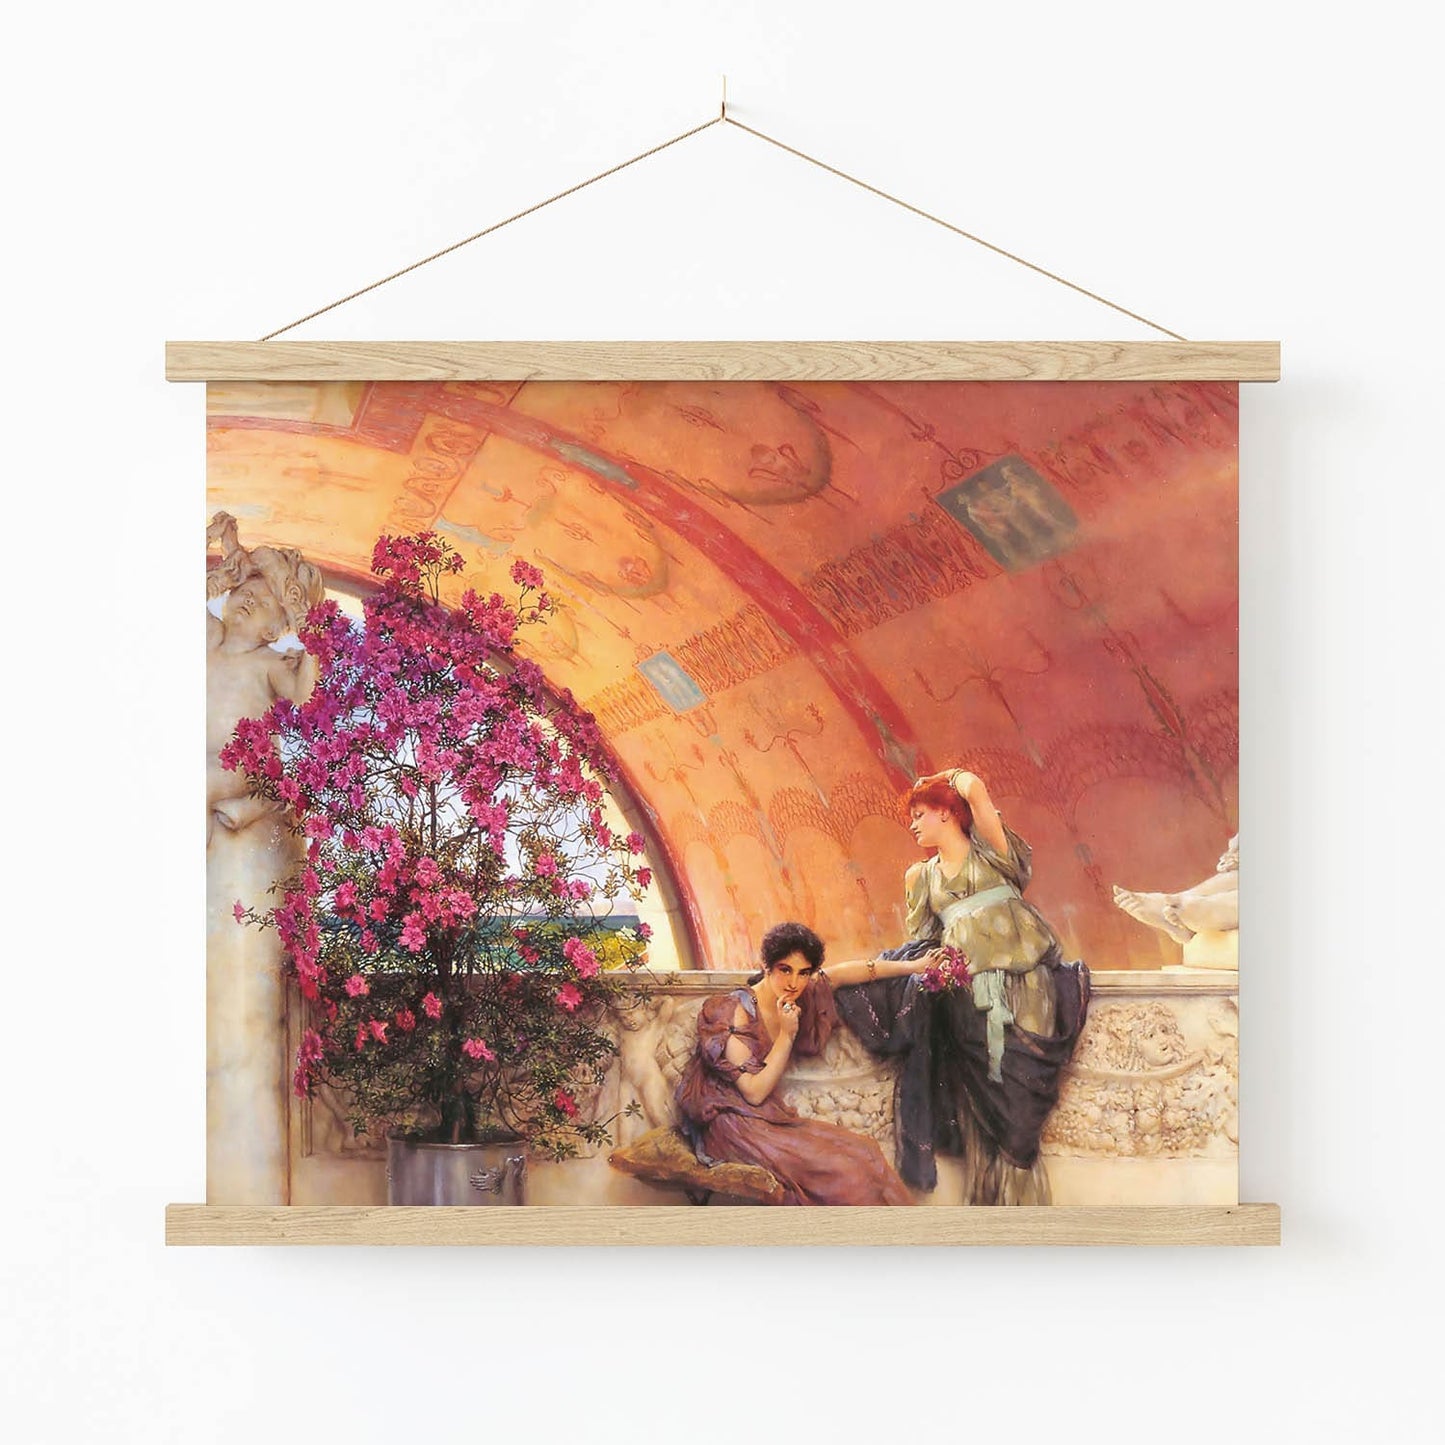 Bright Aesthetic European Art Print in Wood Hanger Frame on Wall